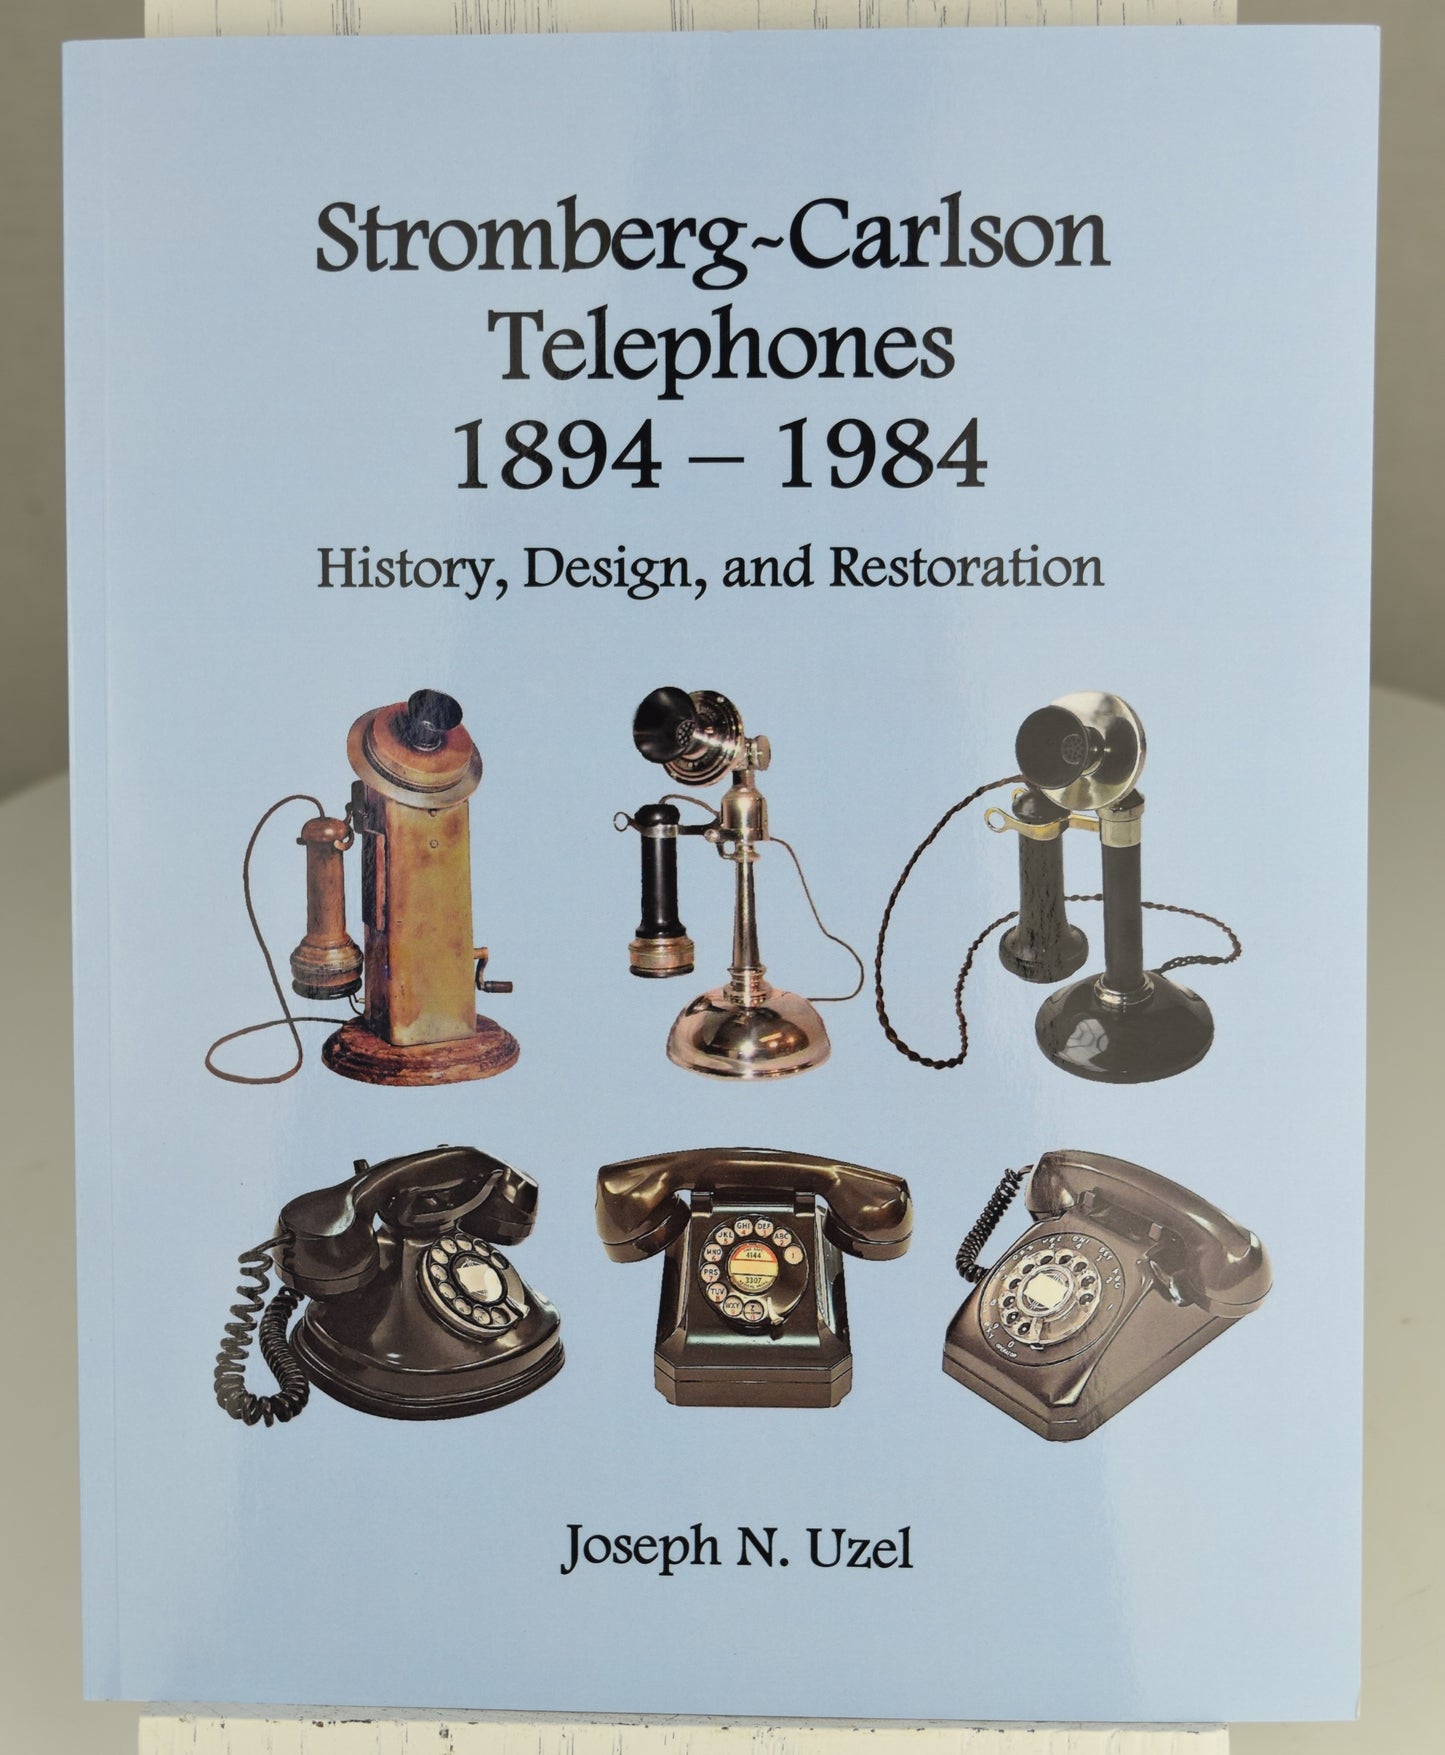 Stromberg-Carlson Telephone History